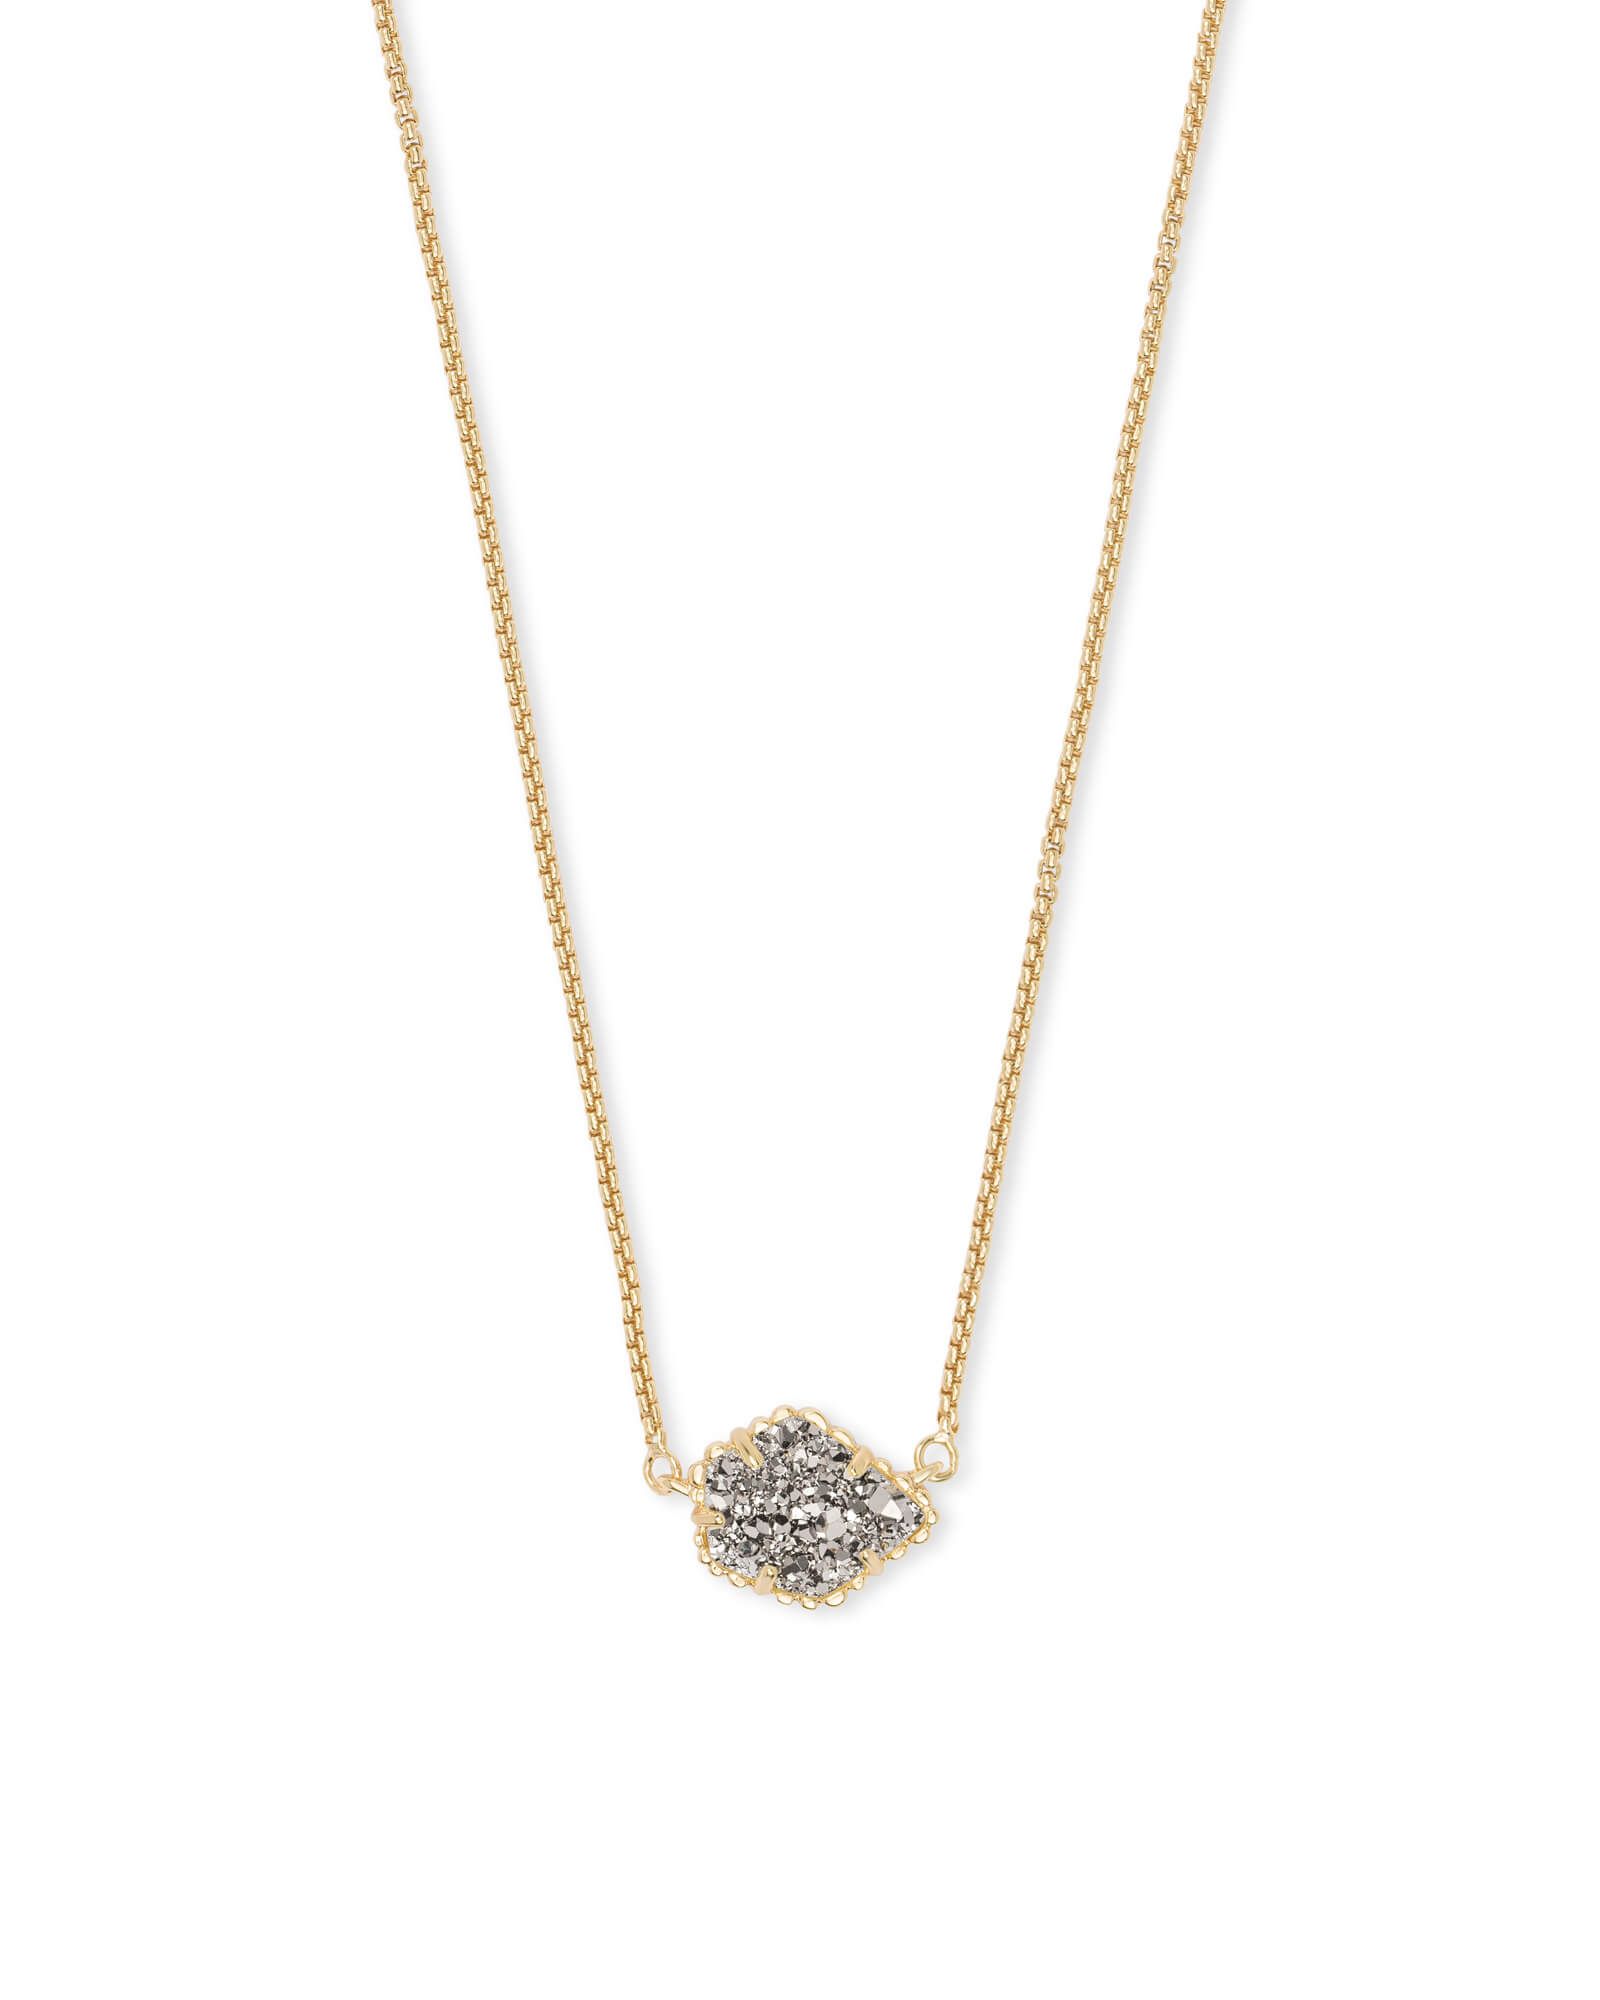 Tess Gold Pendant Necklace in Platinum Drusy | Kendra Scott